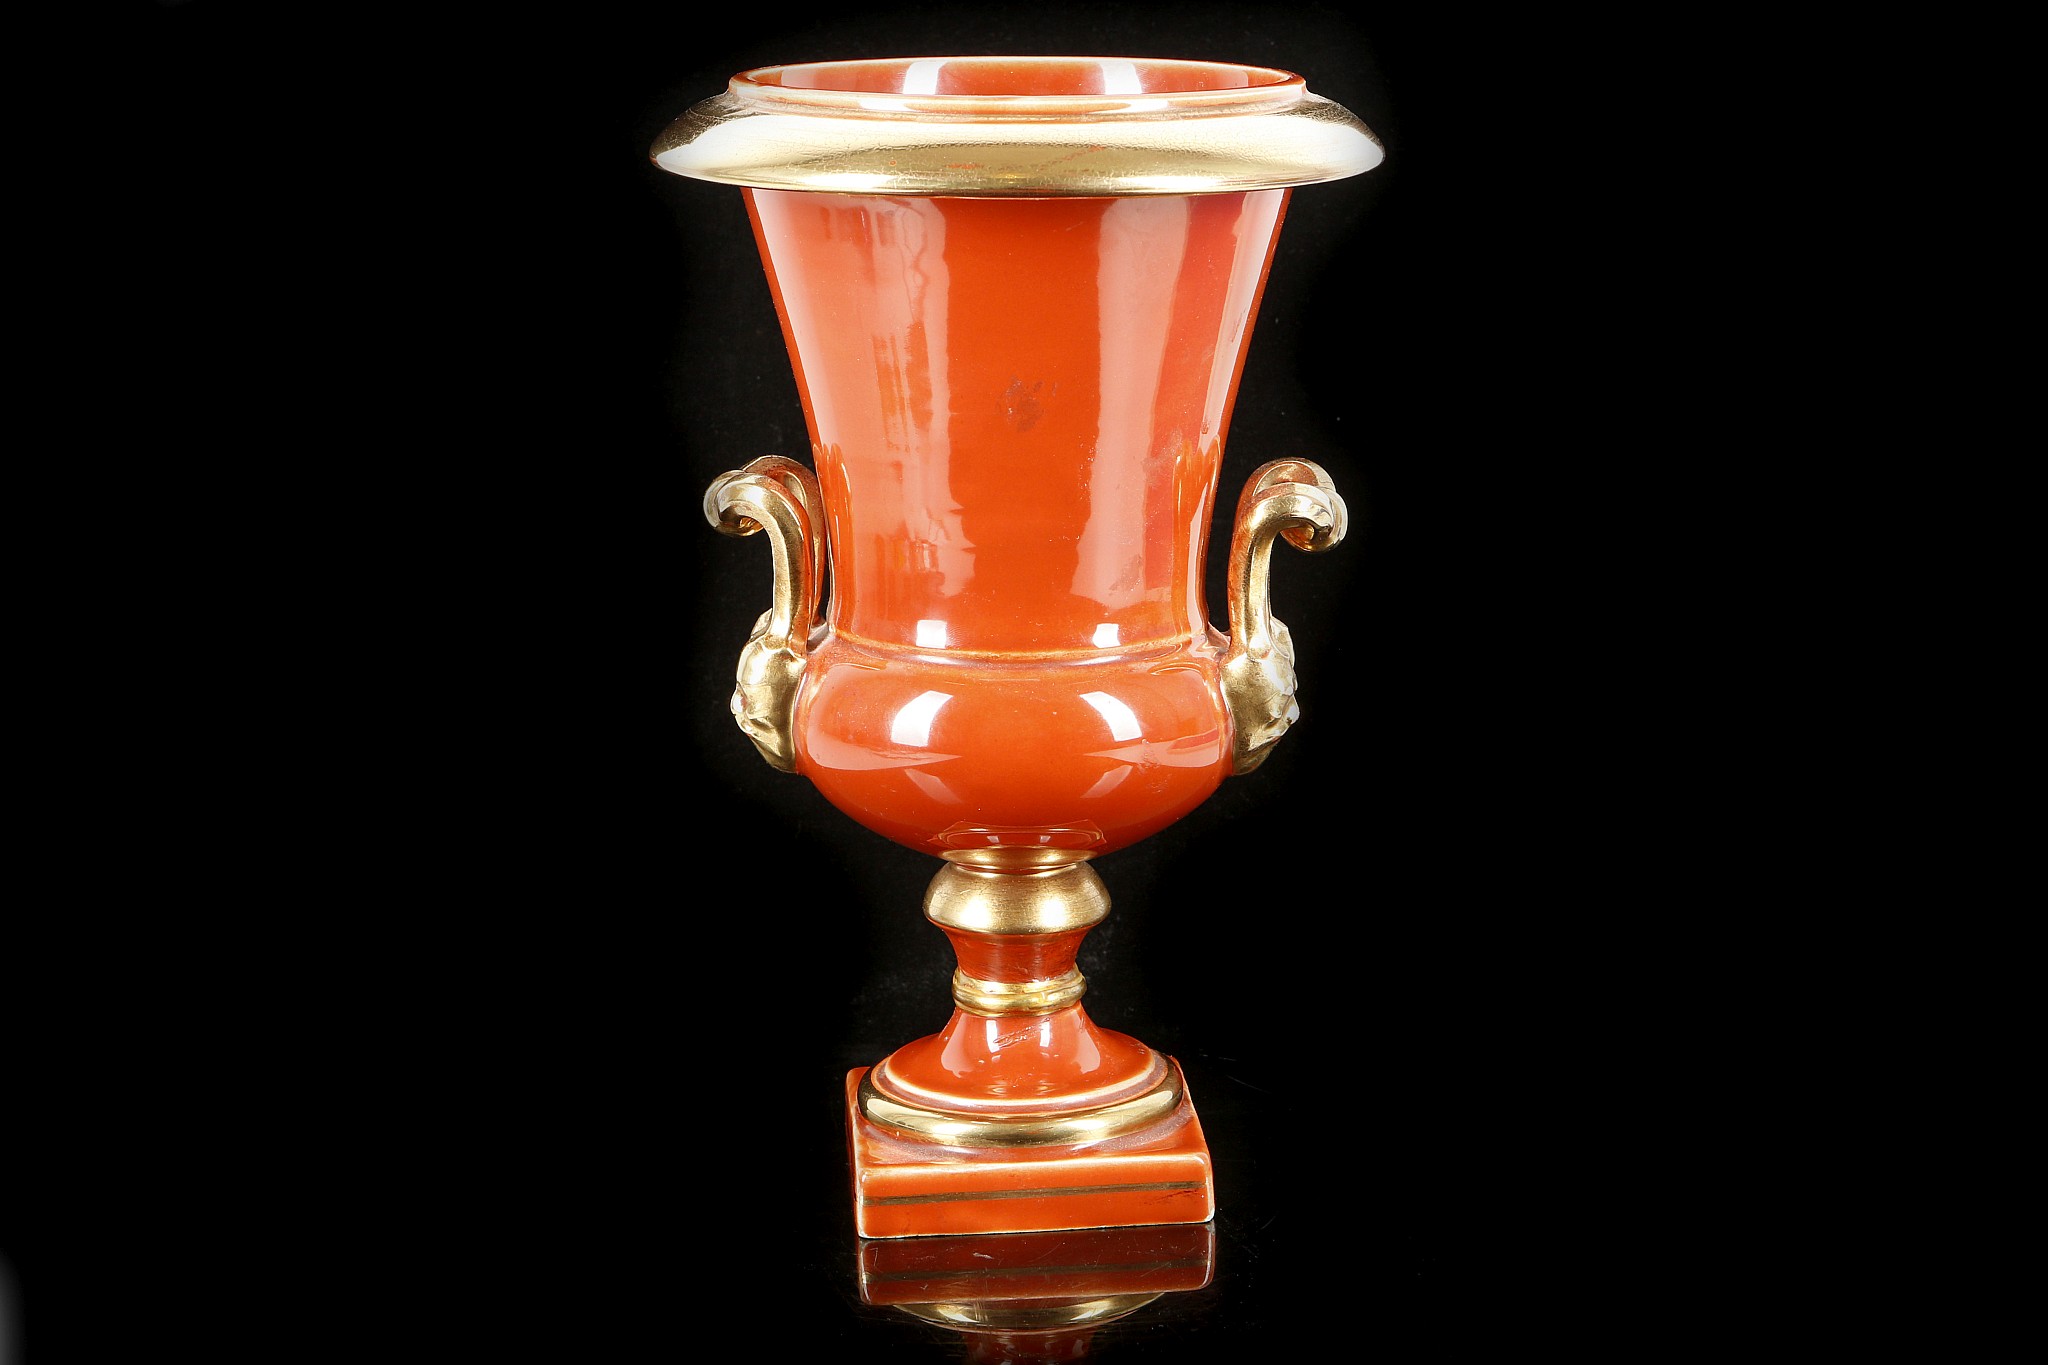 A Sang-de-boeuf glazed inverted campana form ceramic twin handled urn, on socle plinth, with gilt